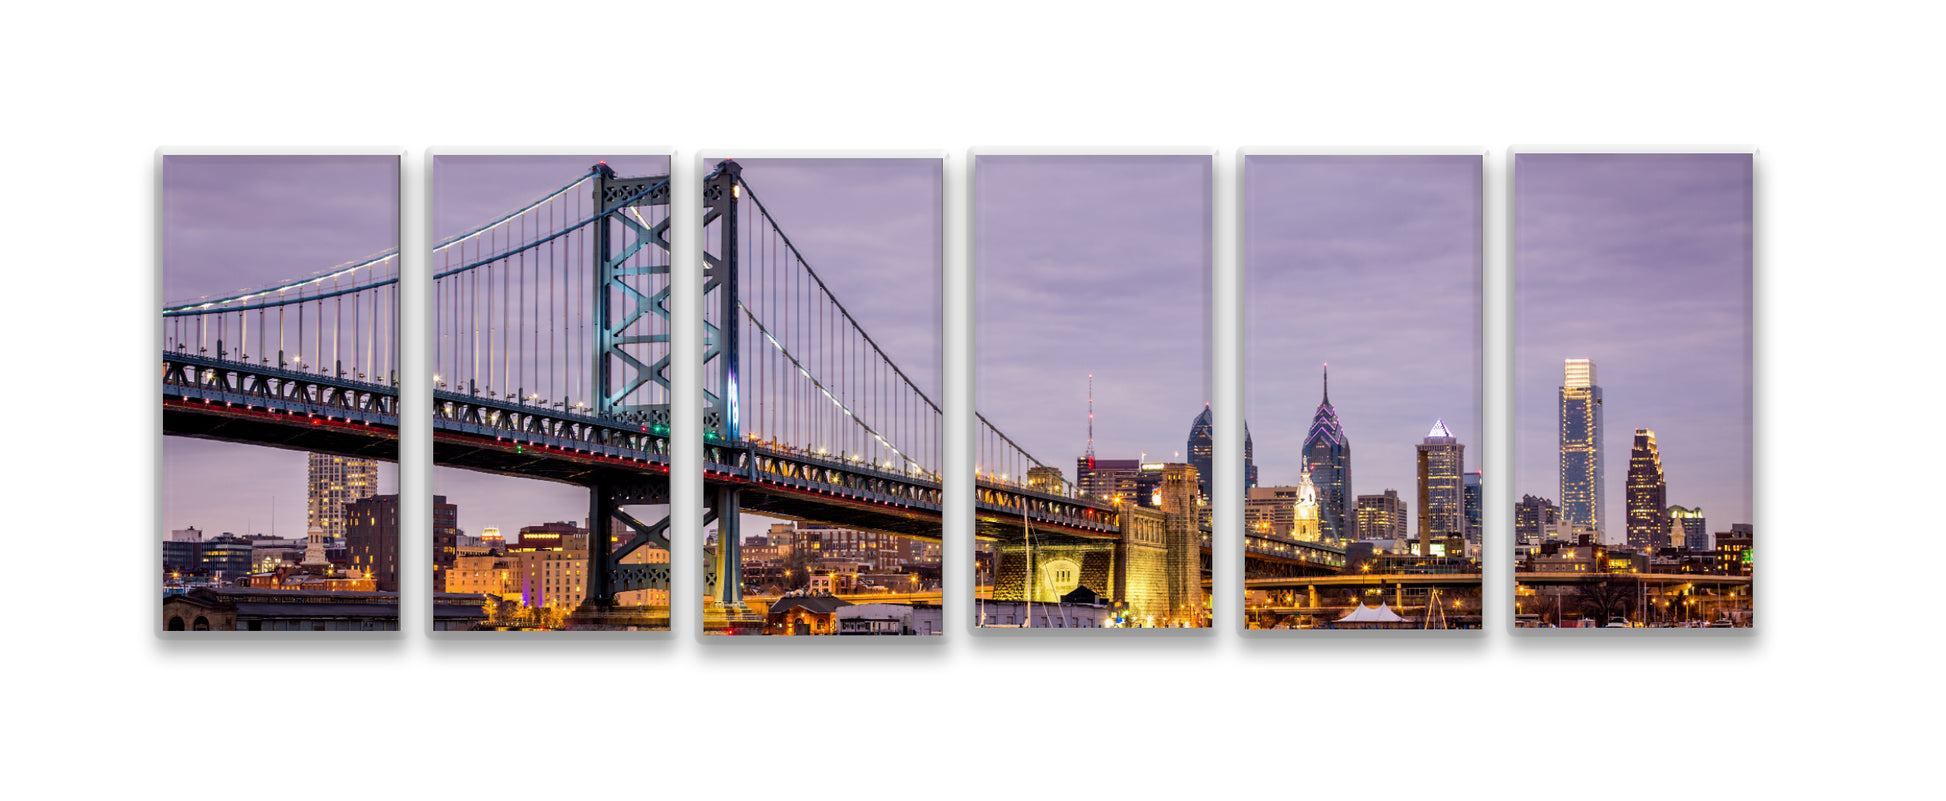 6 panel spilt canvas of Philadelphia skyline